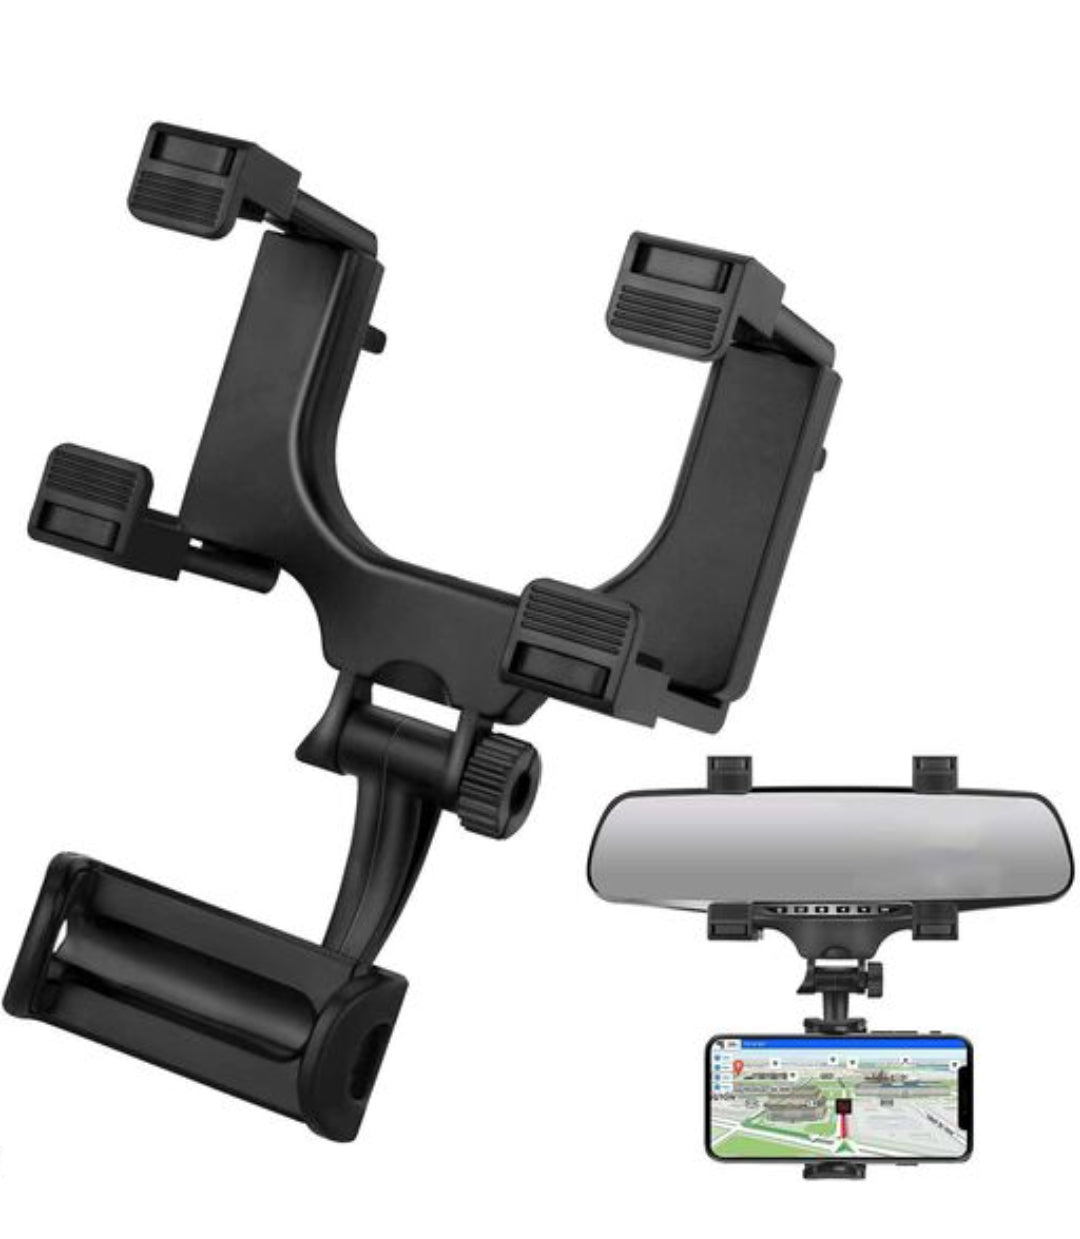 iPretty Flexible Car Mobile Holder Rear view mirror attachment